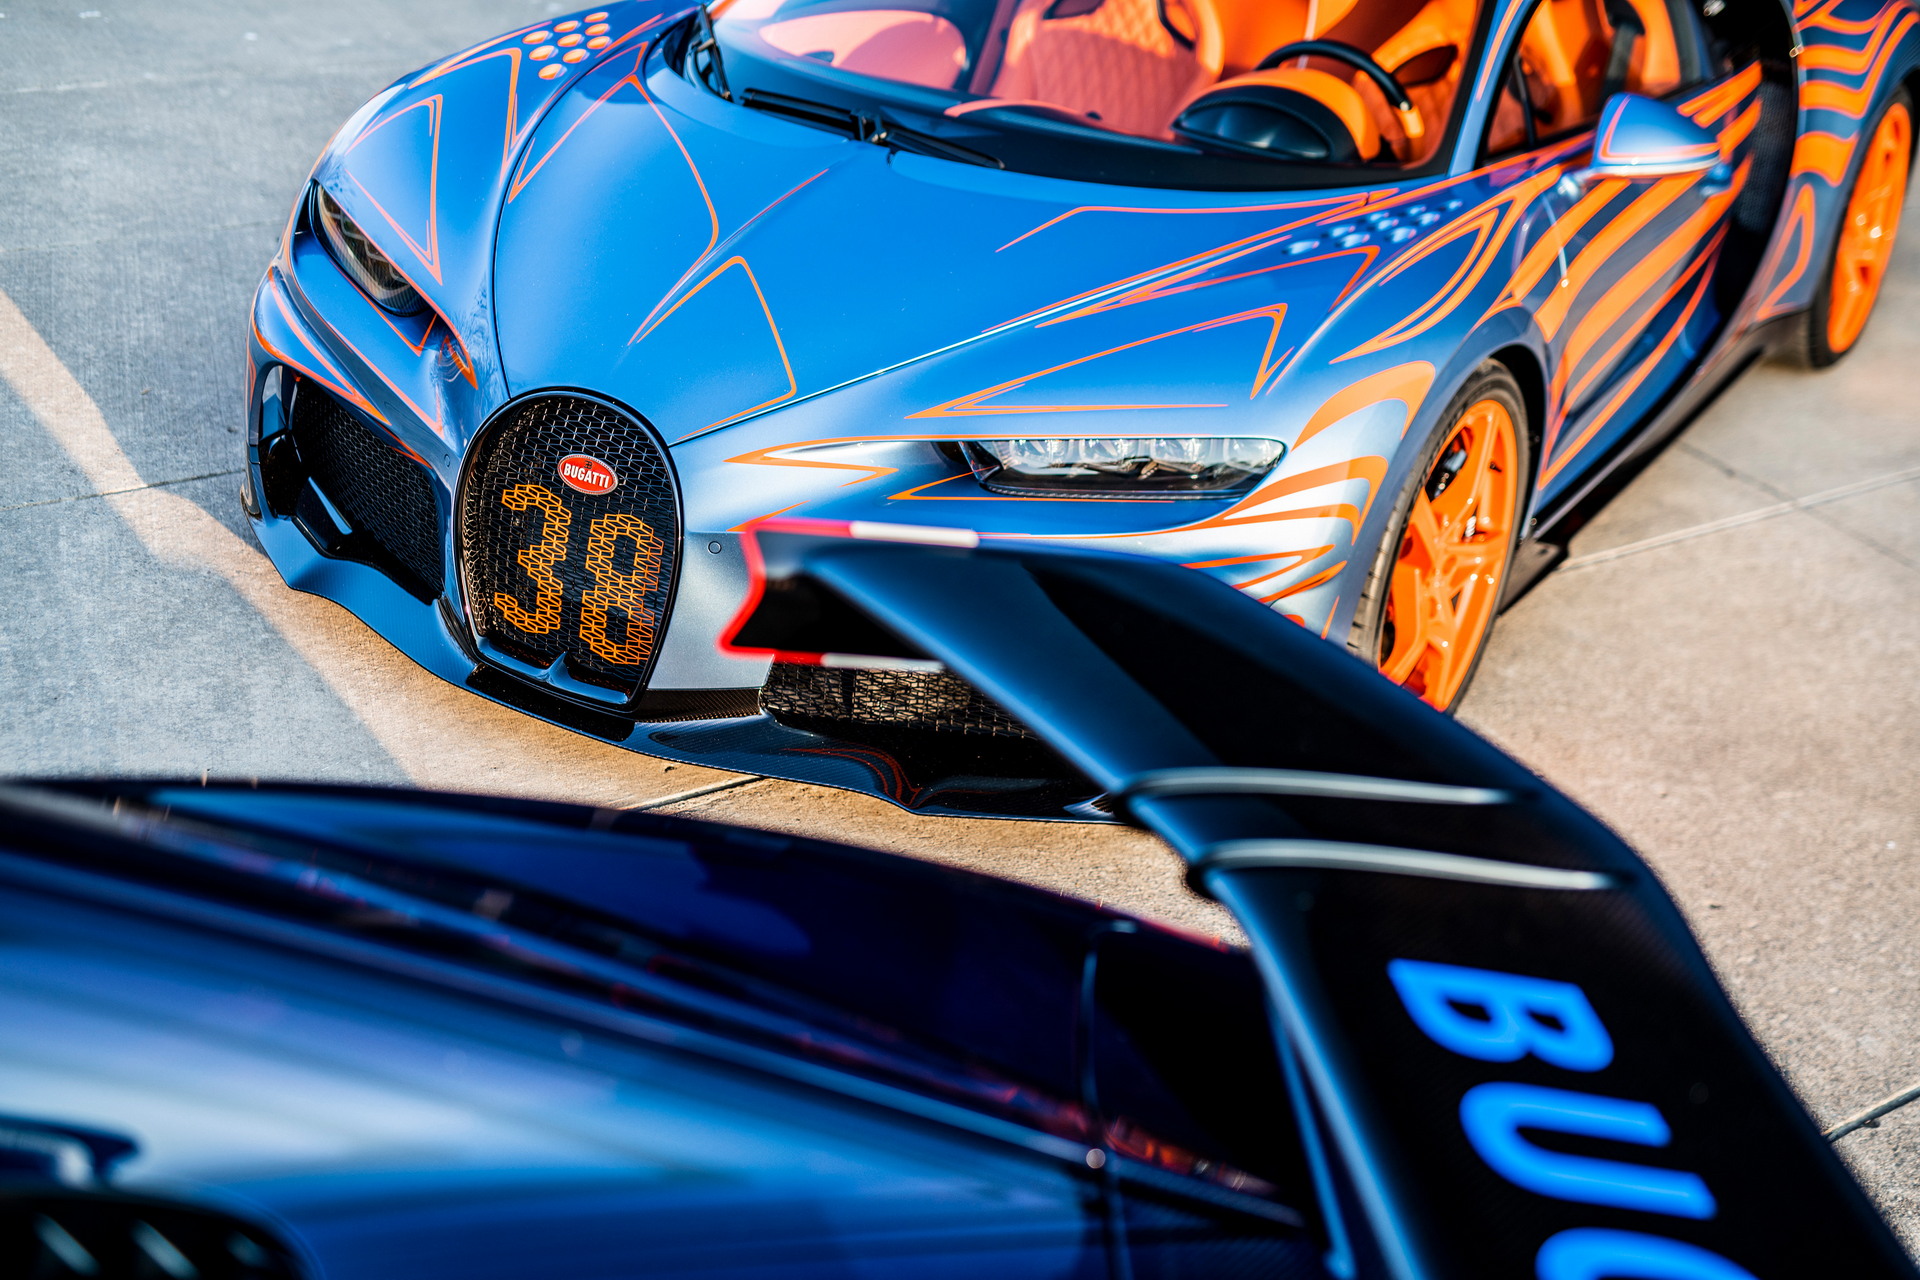 Bugatti Chiron Vague De Lumiere (5)